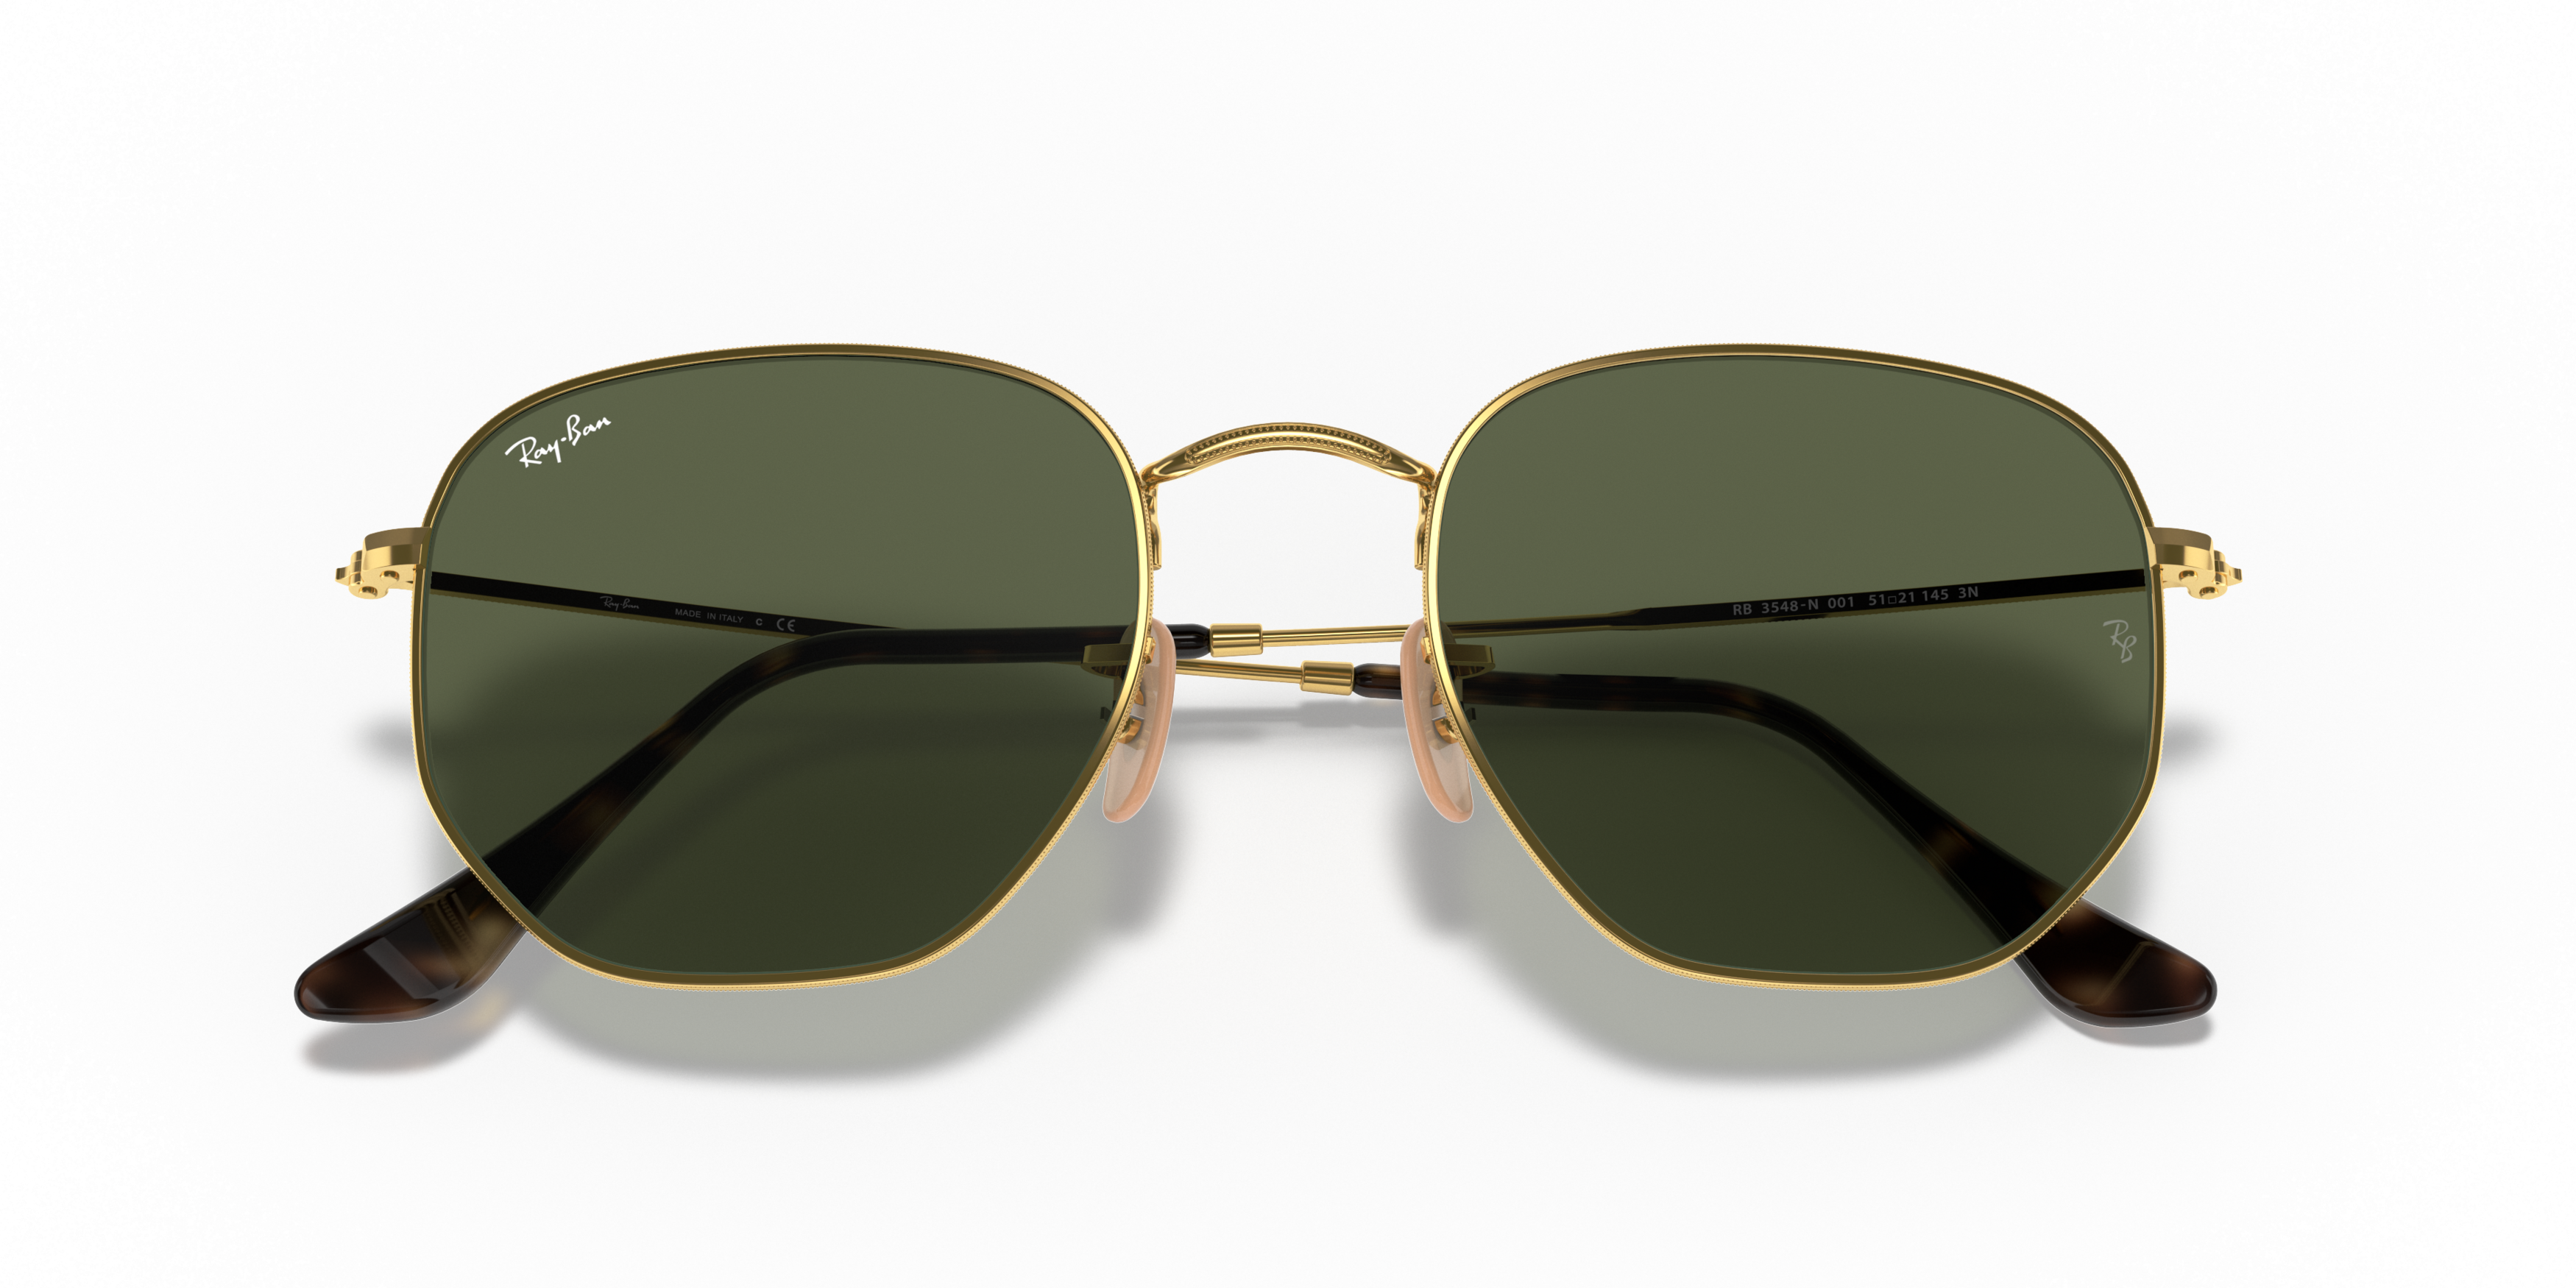 Folded Ray-Ban RB 3548N (001) Sunglasses Green / Gold